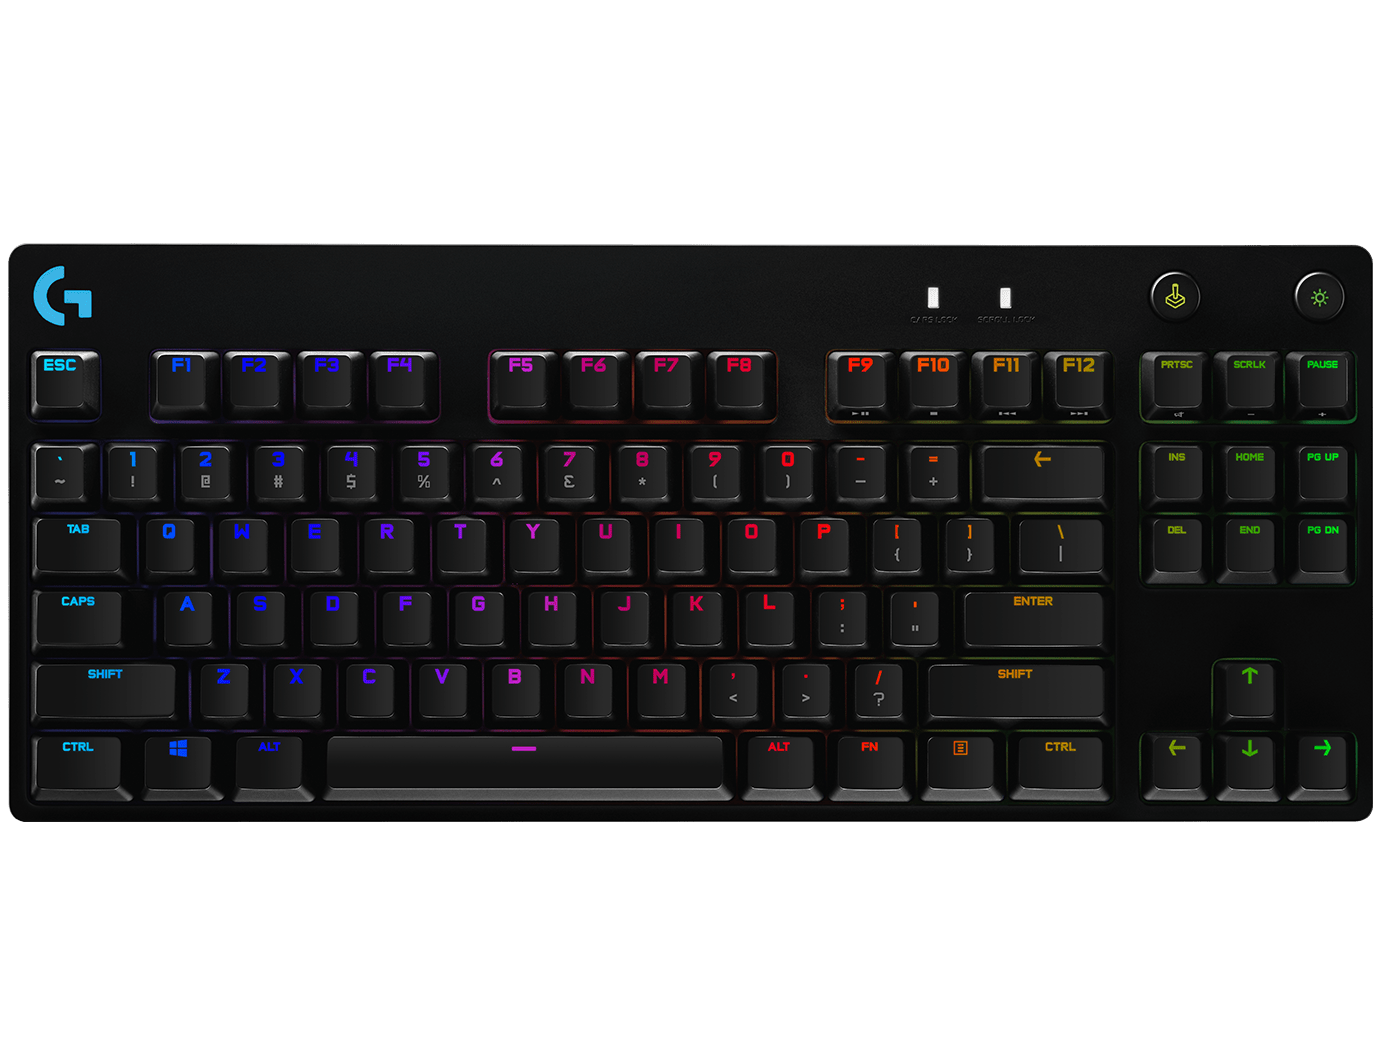 Clavier Logitech G Pro Mechanical Gaming Keyboard